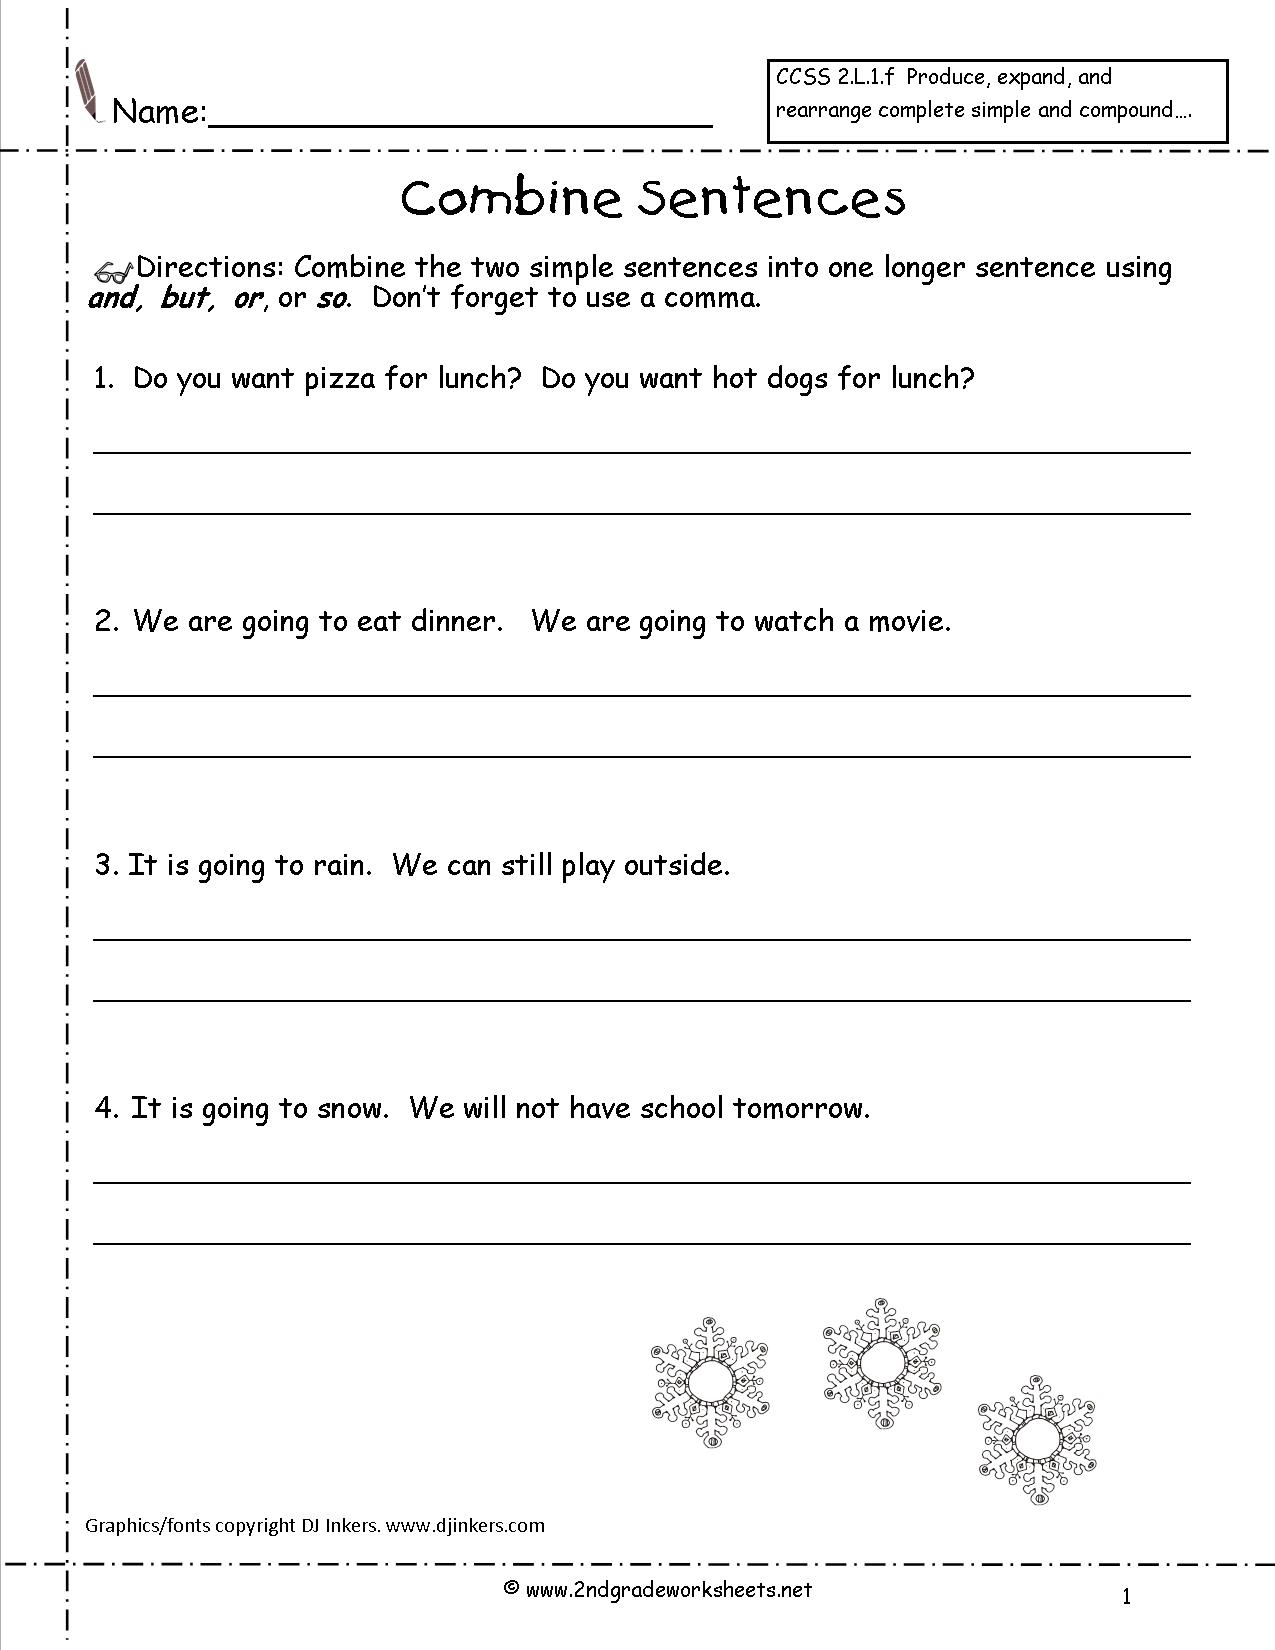 15 Best Images of First Grade Compound Worksheets  Combining Sentences Worksheets Second Grade 